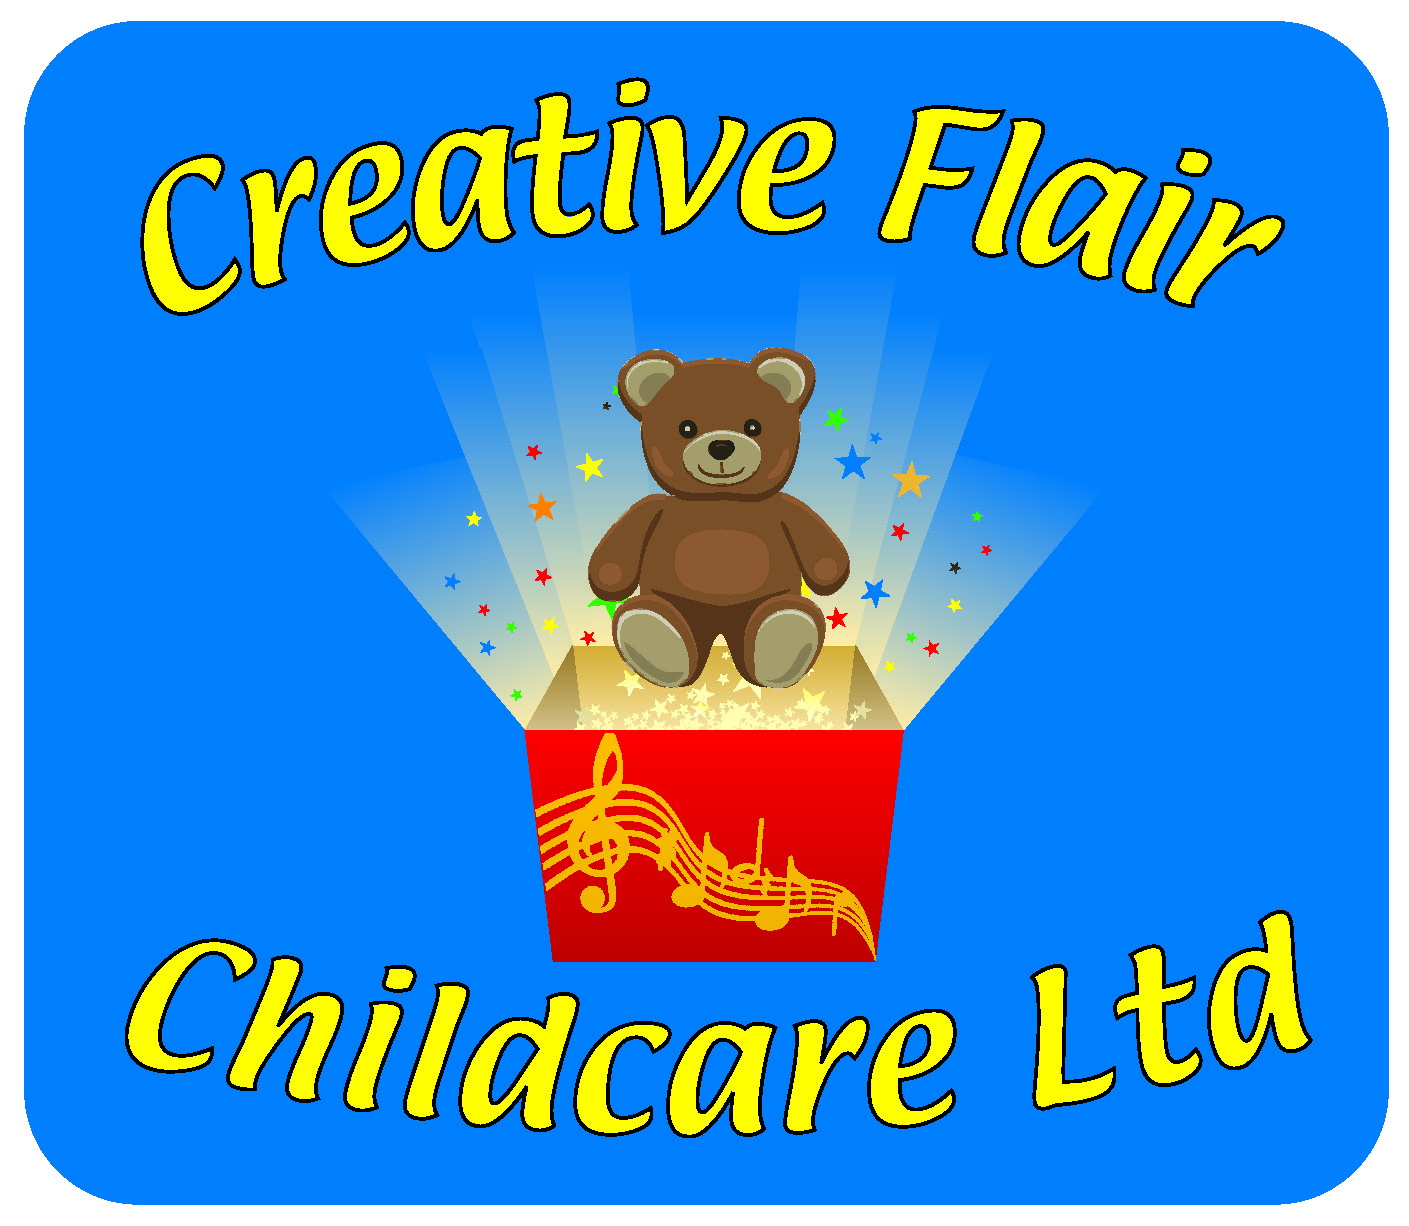 Creative Flair Childcare's logo